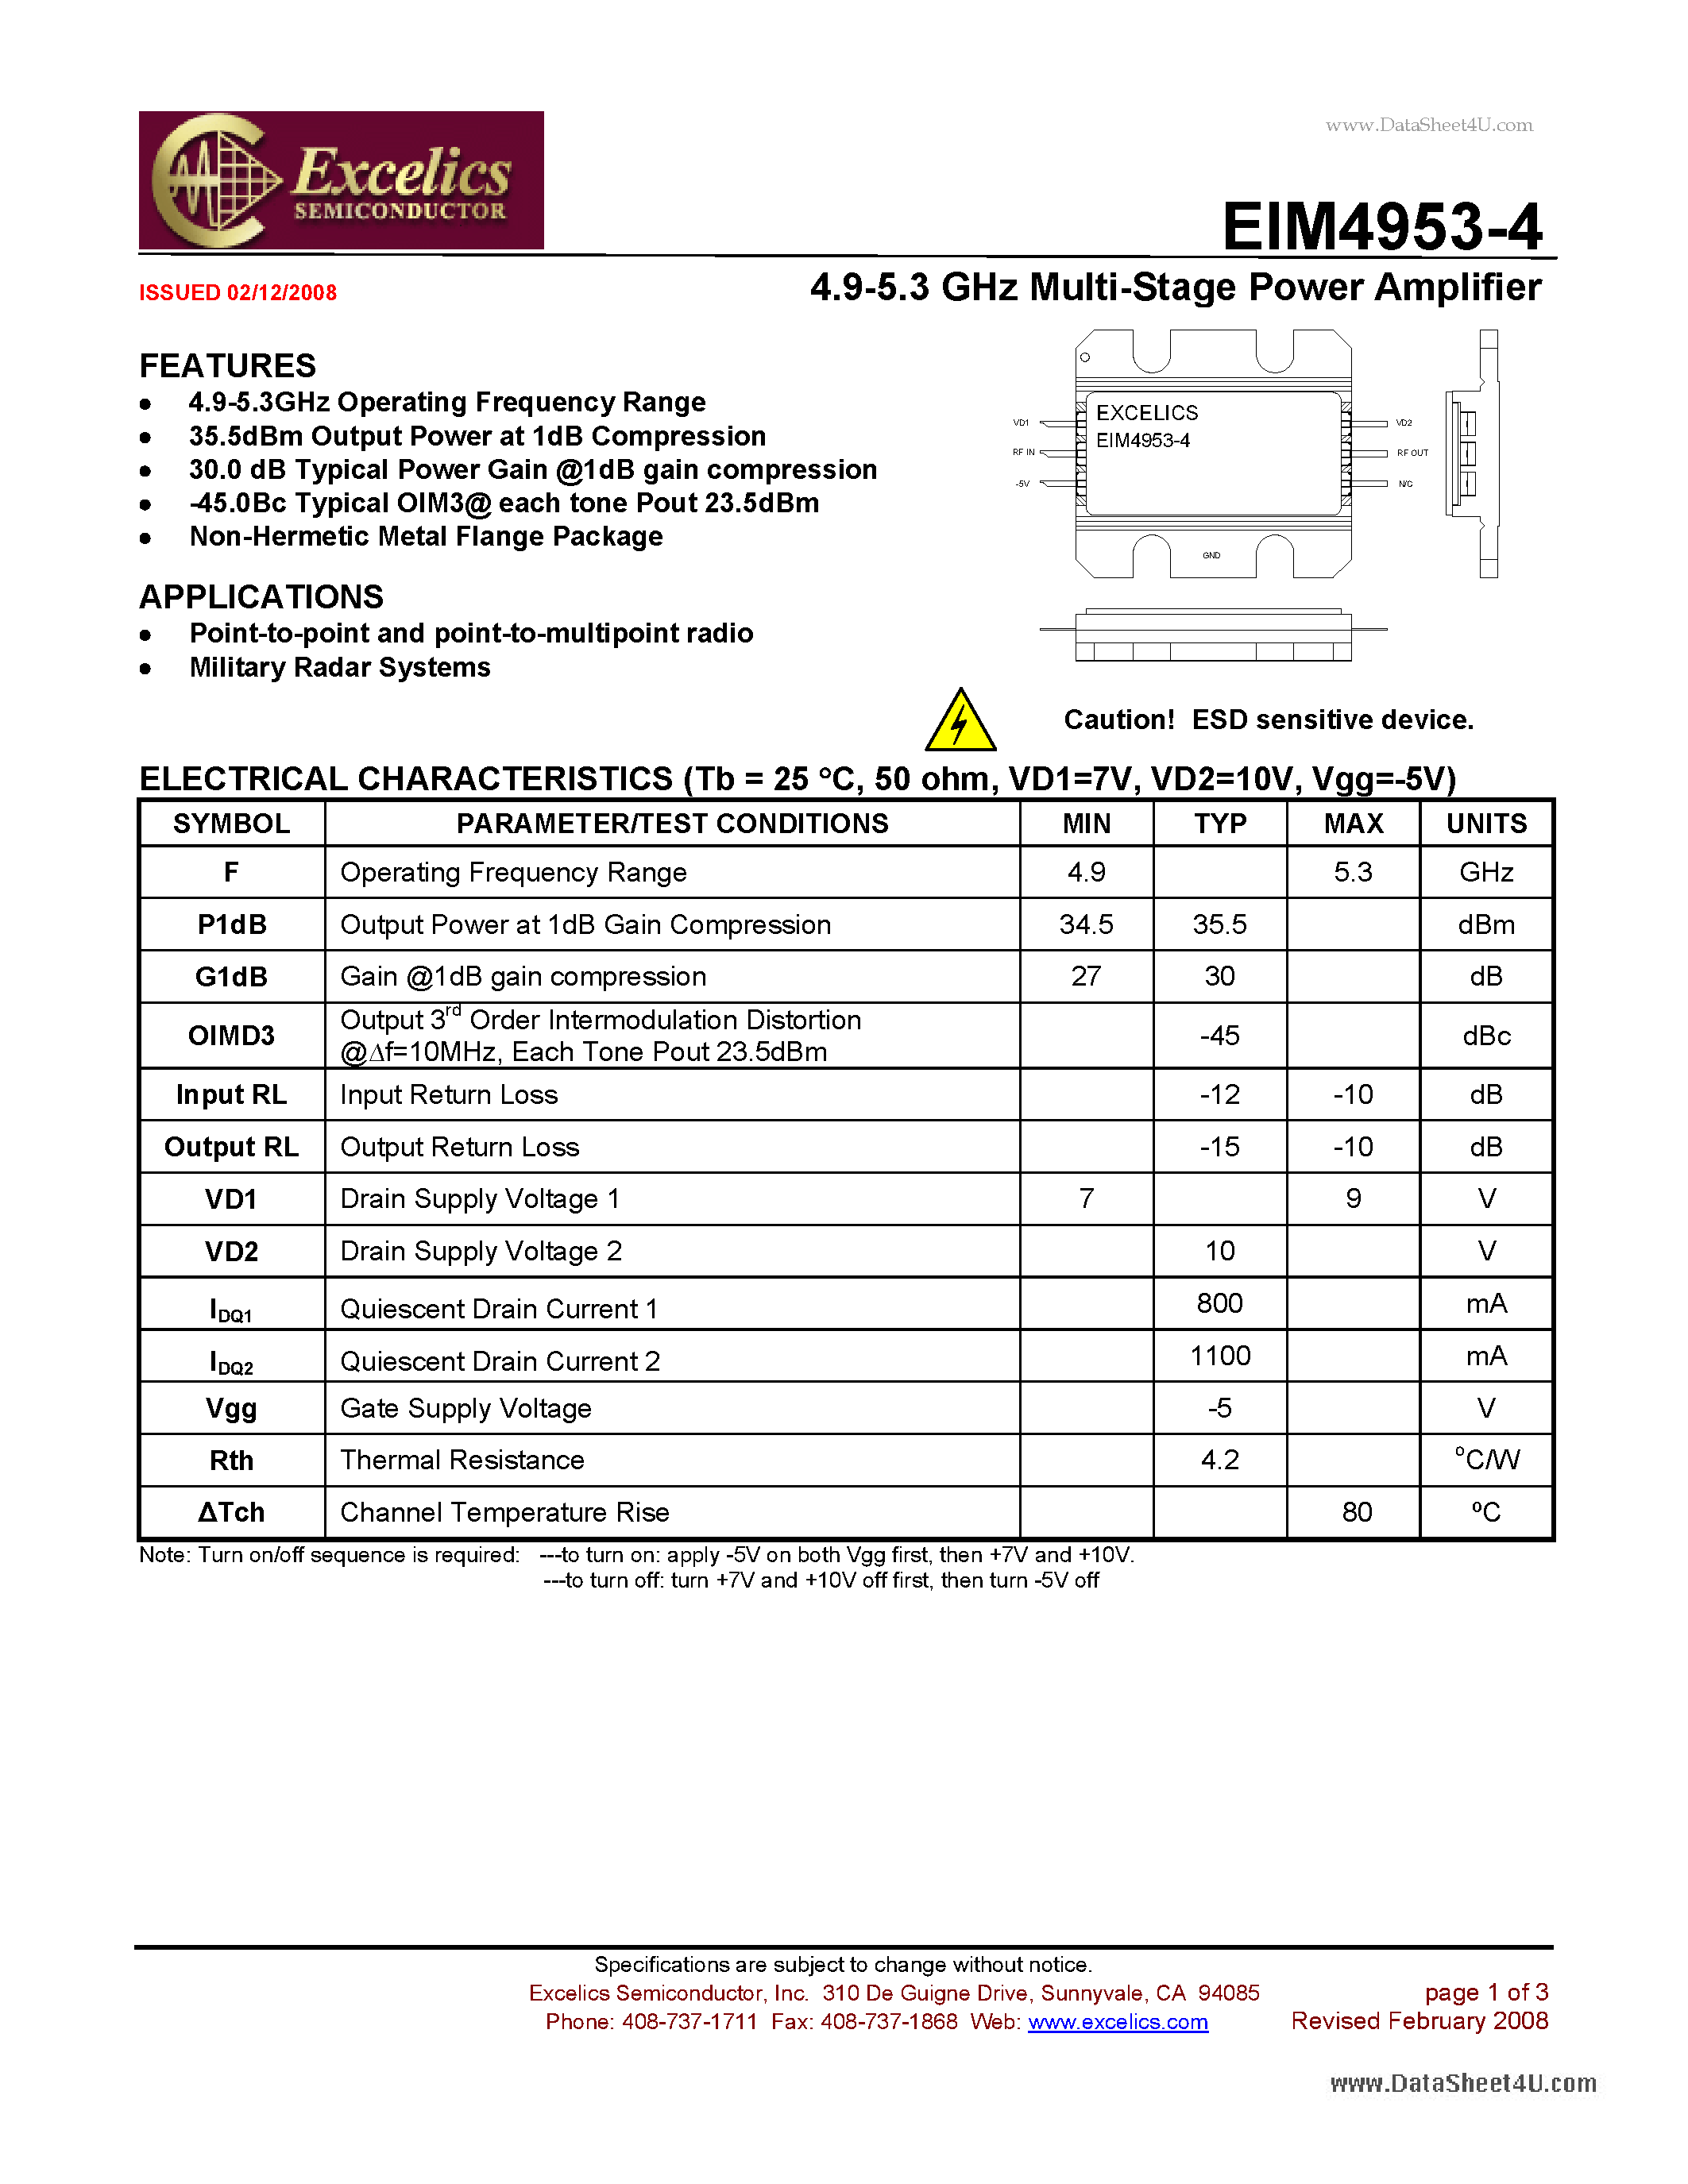 Даташит EIM4953-4 - 4.9-5.3 GHz Multi-Stage Power Amplifier страница 1